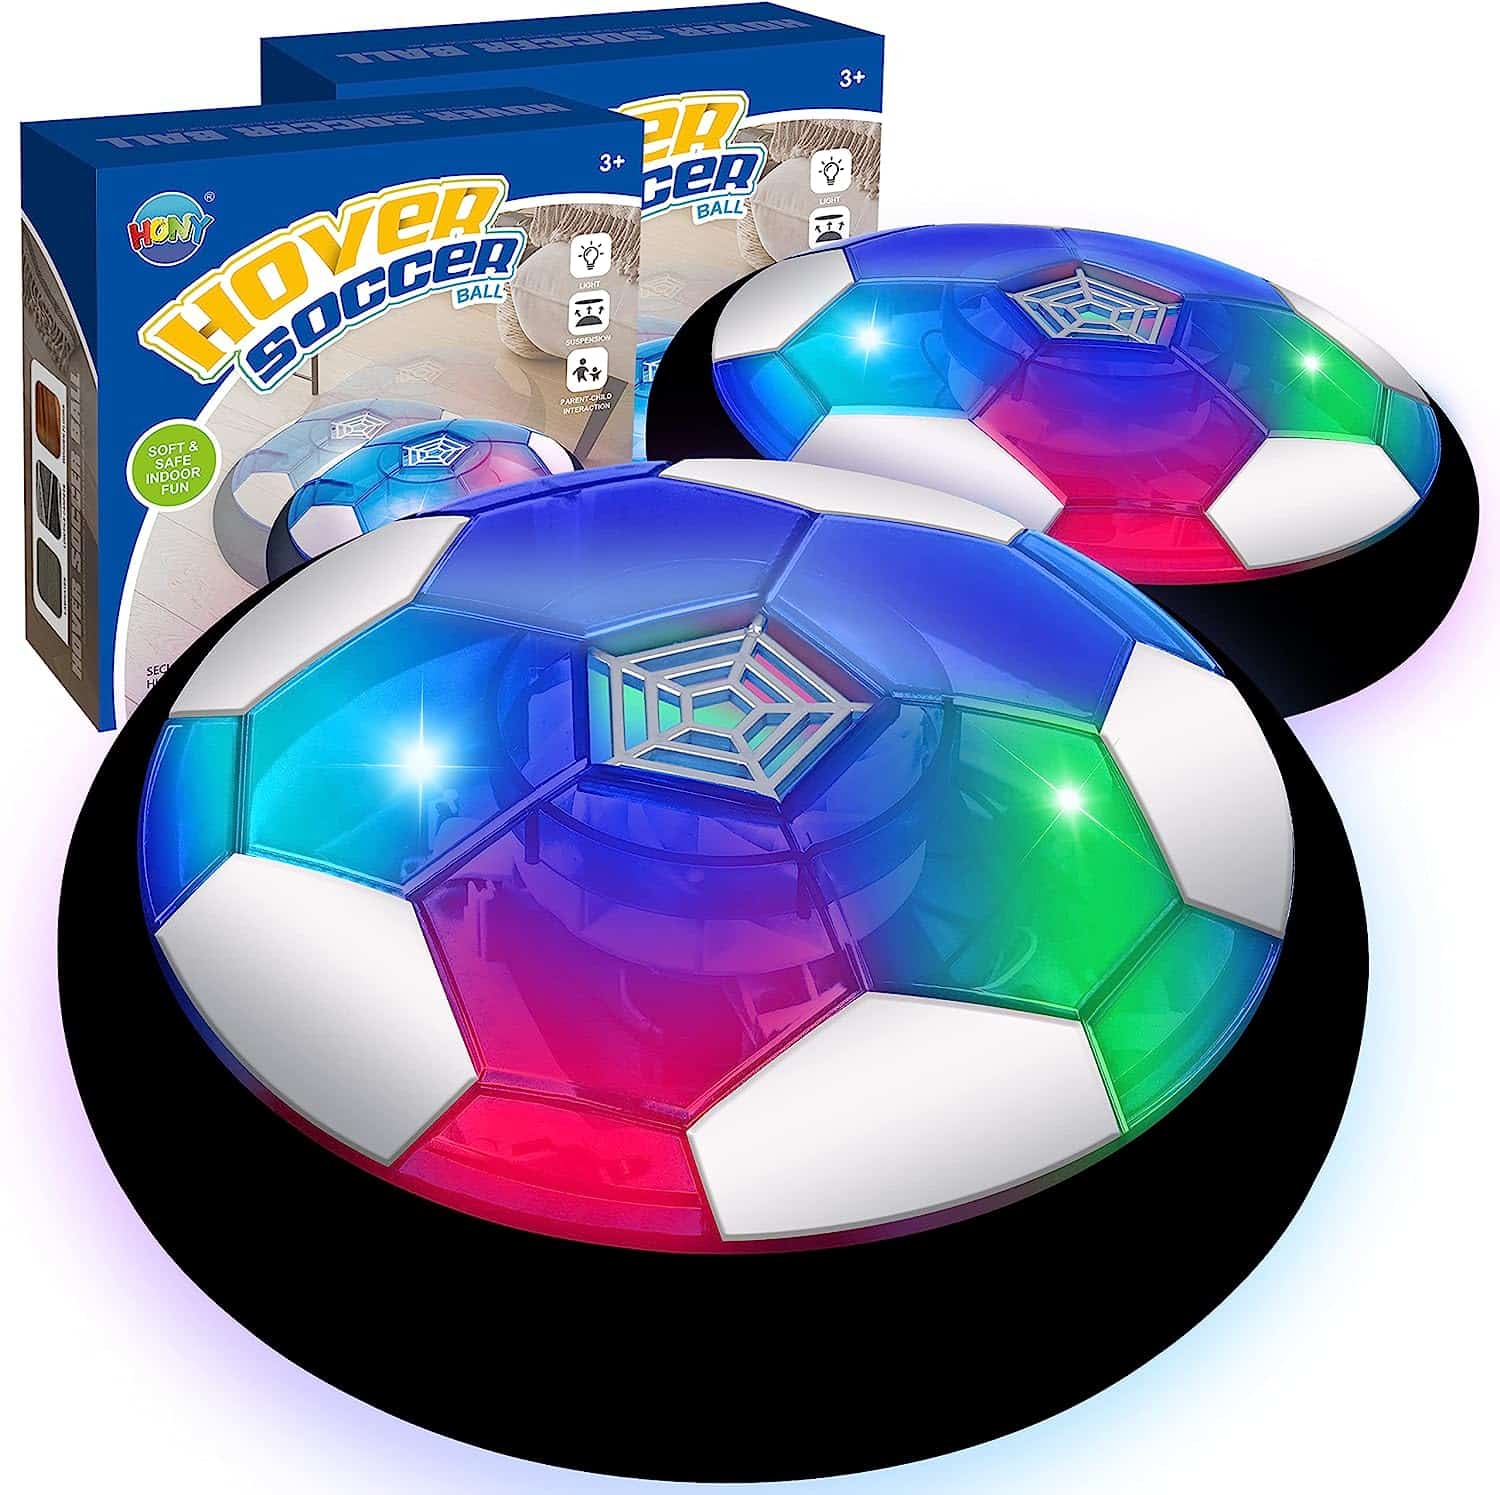 Hover Soccer Ball Toys